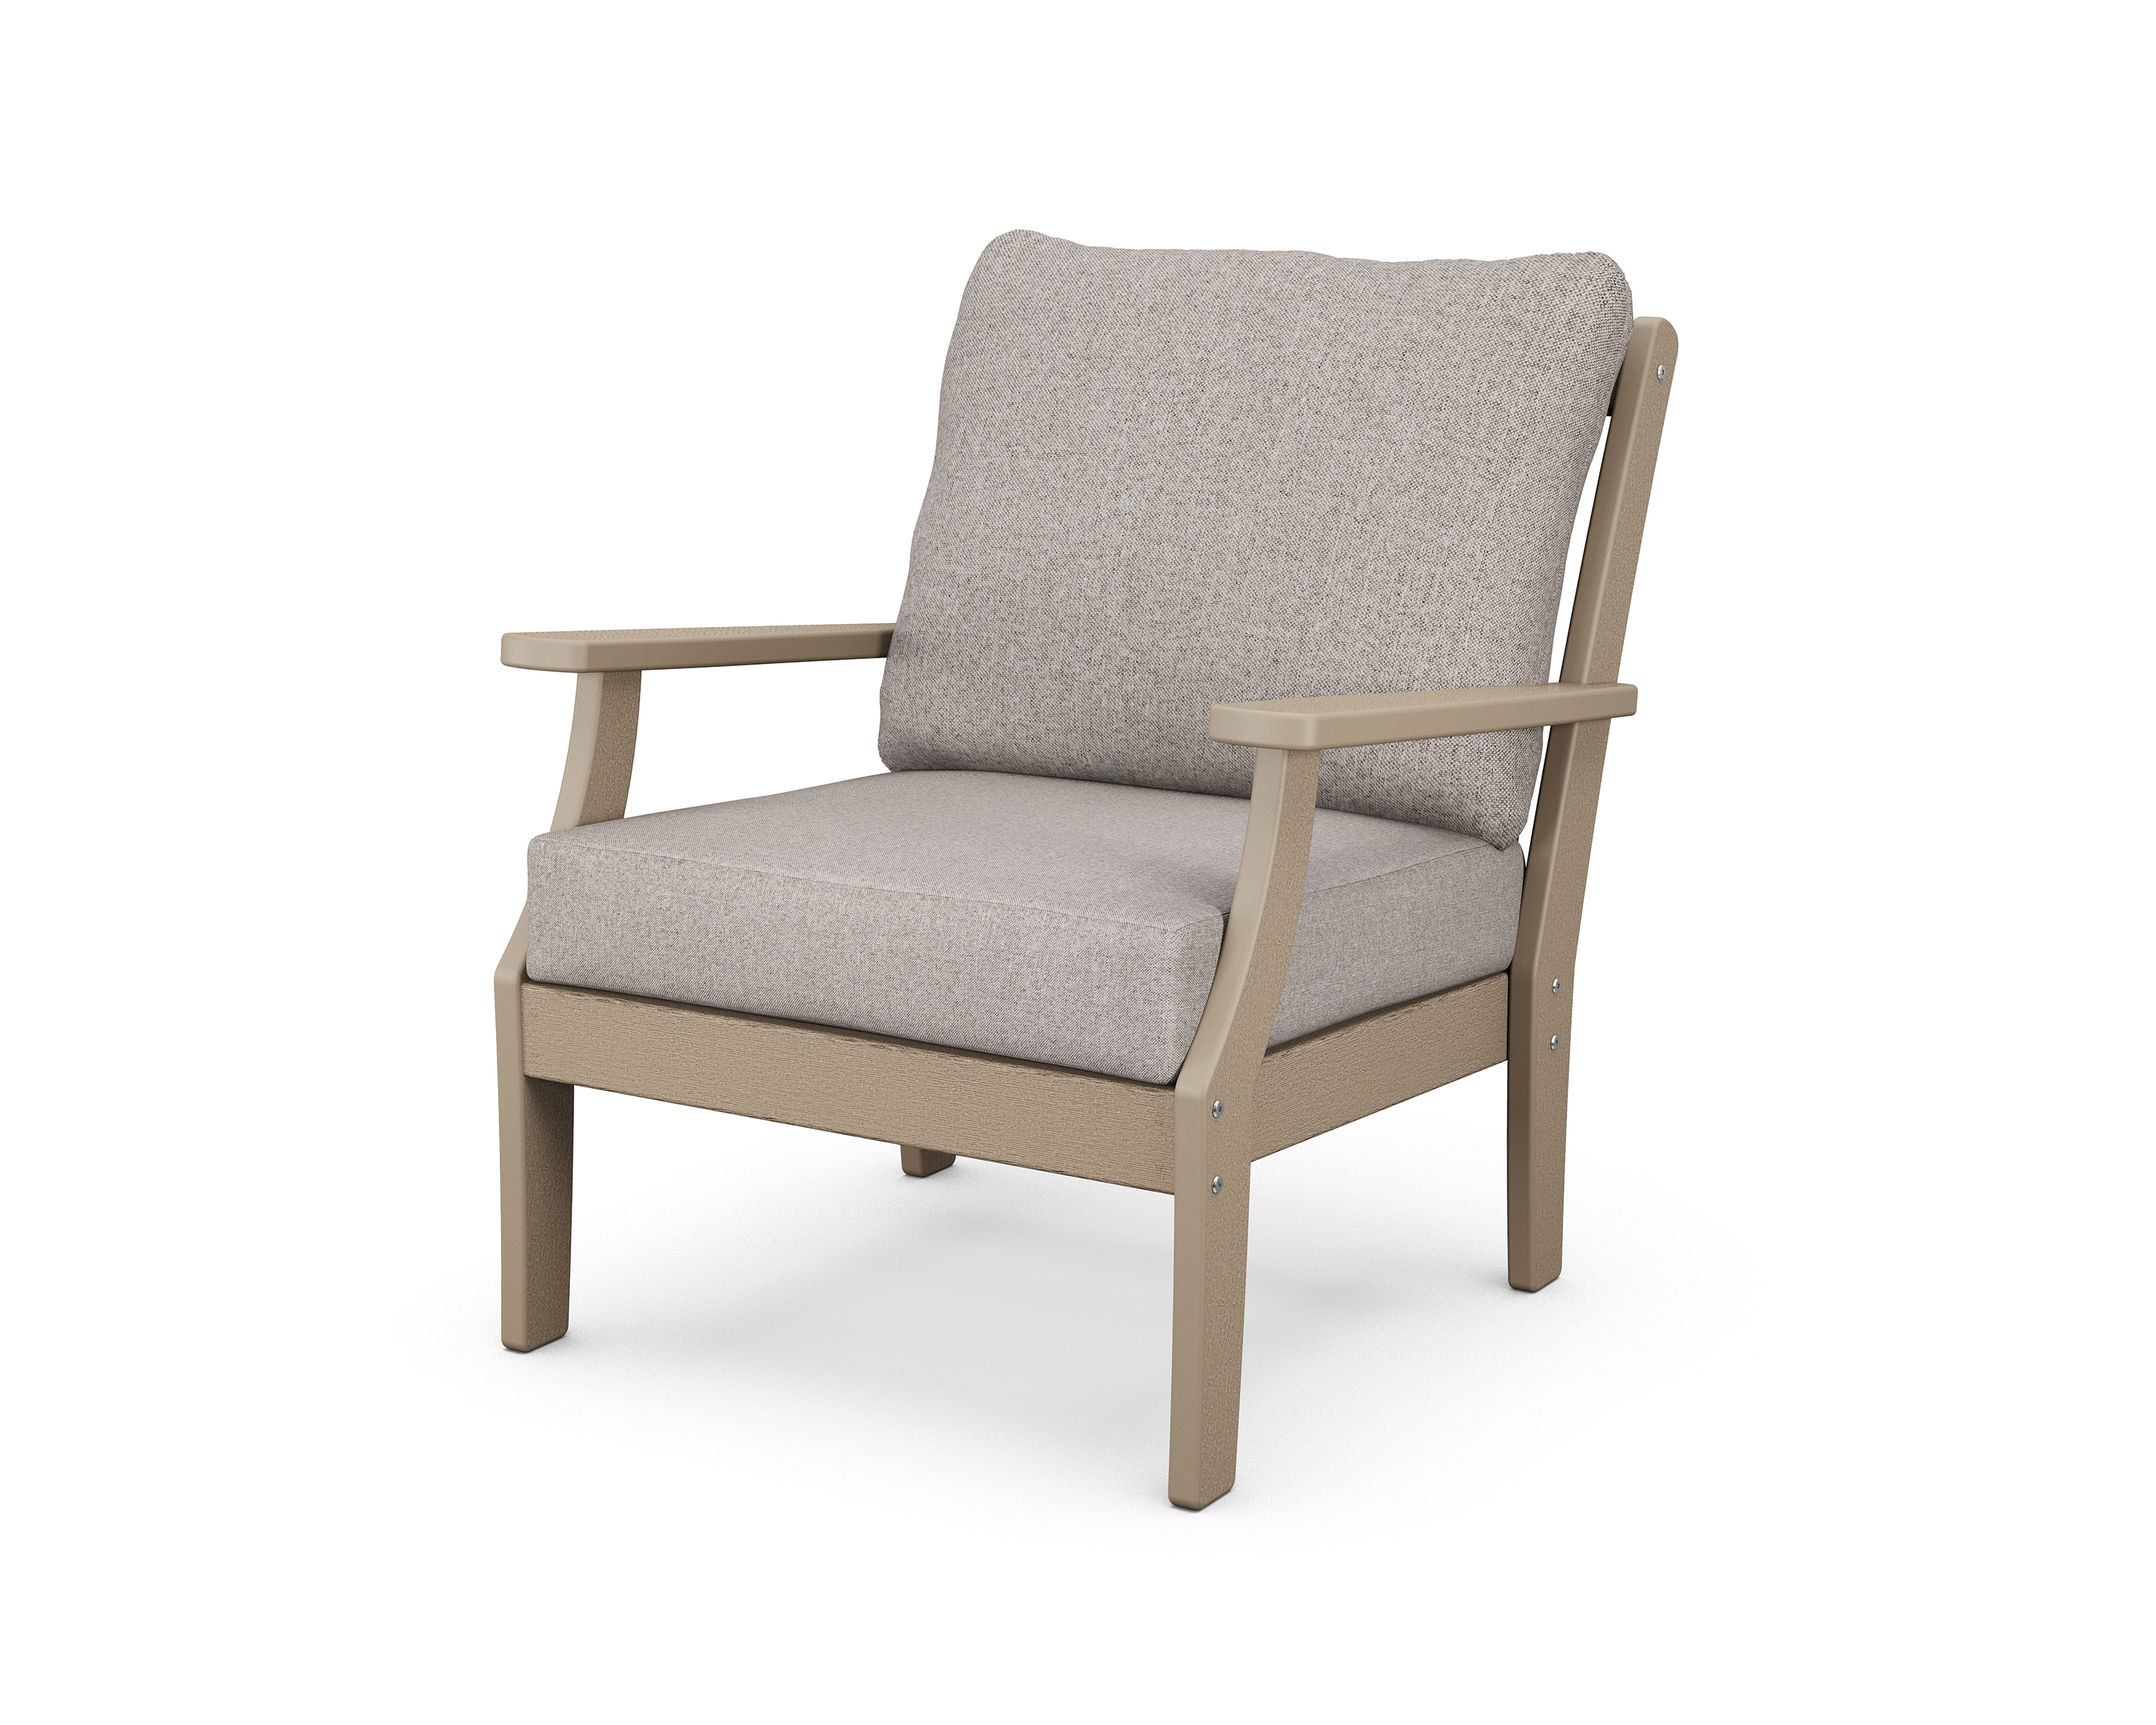 braxton deep seating chair in vintage sahara / weathered tweed product image